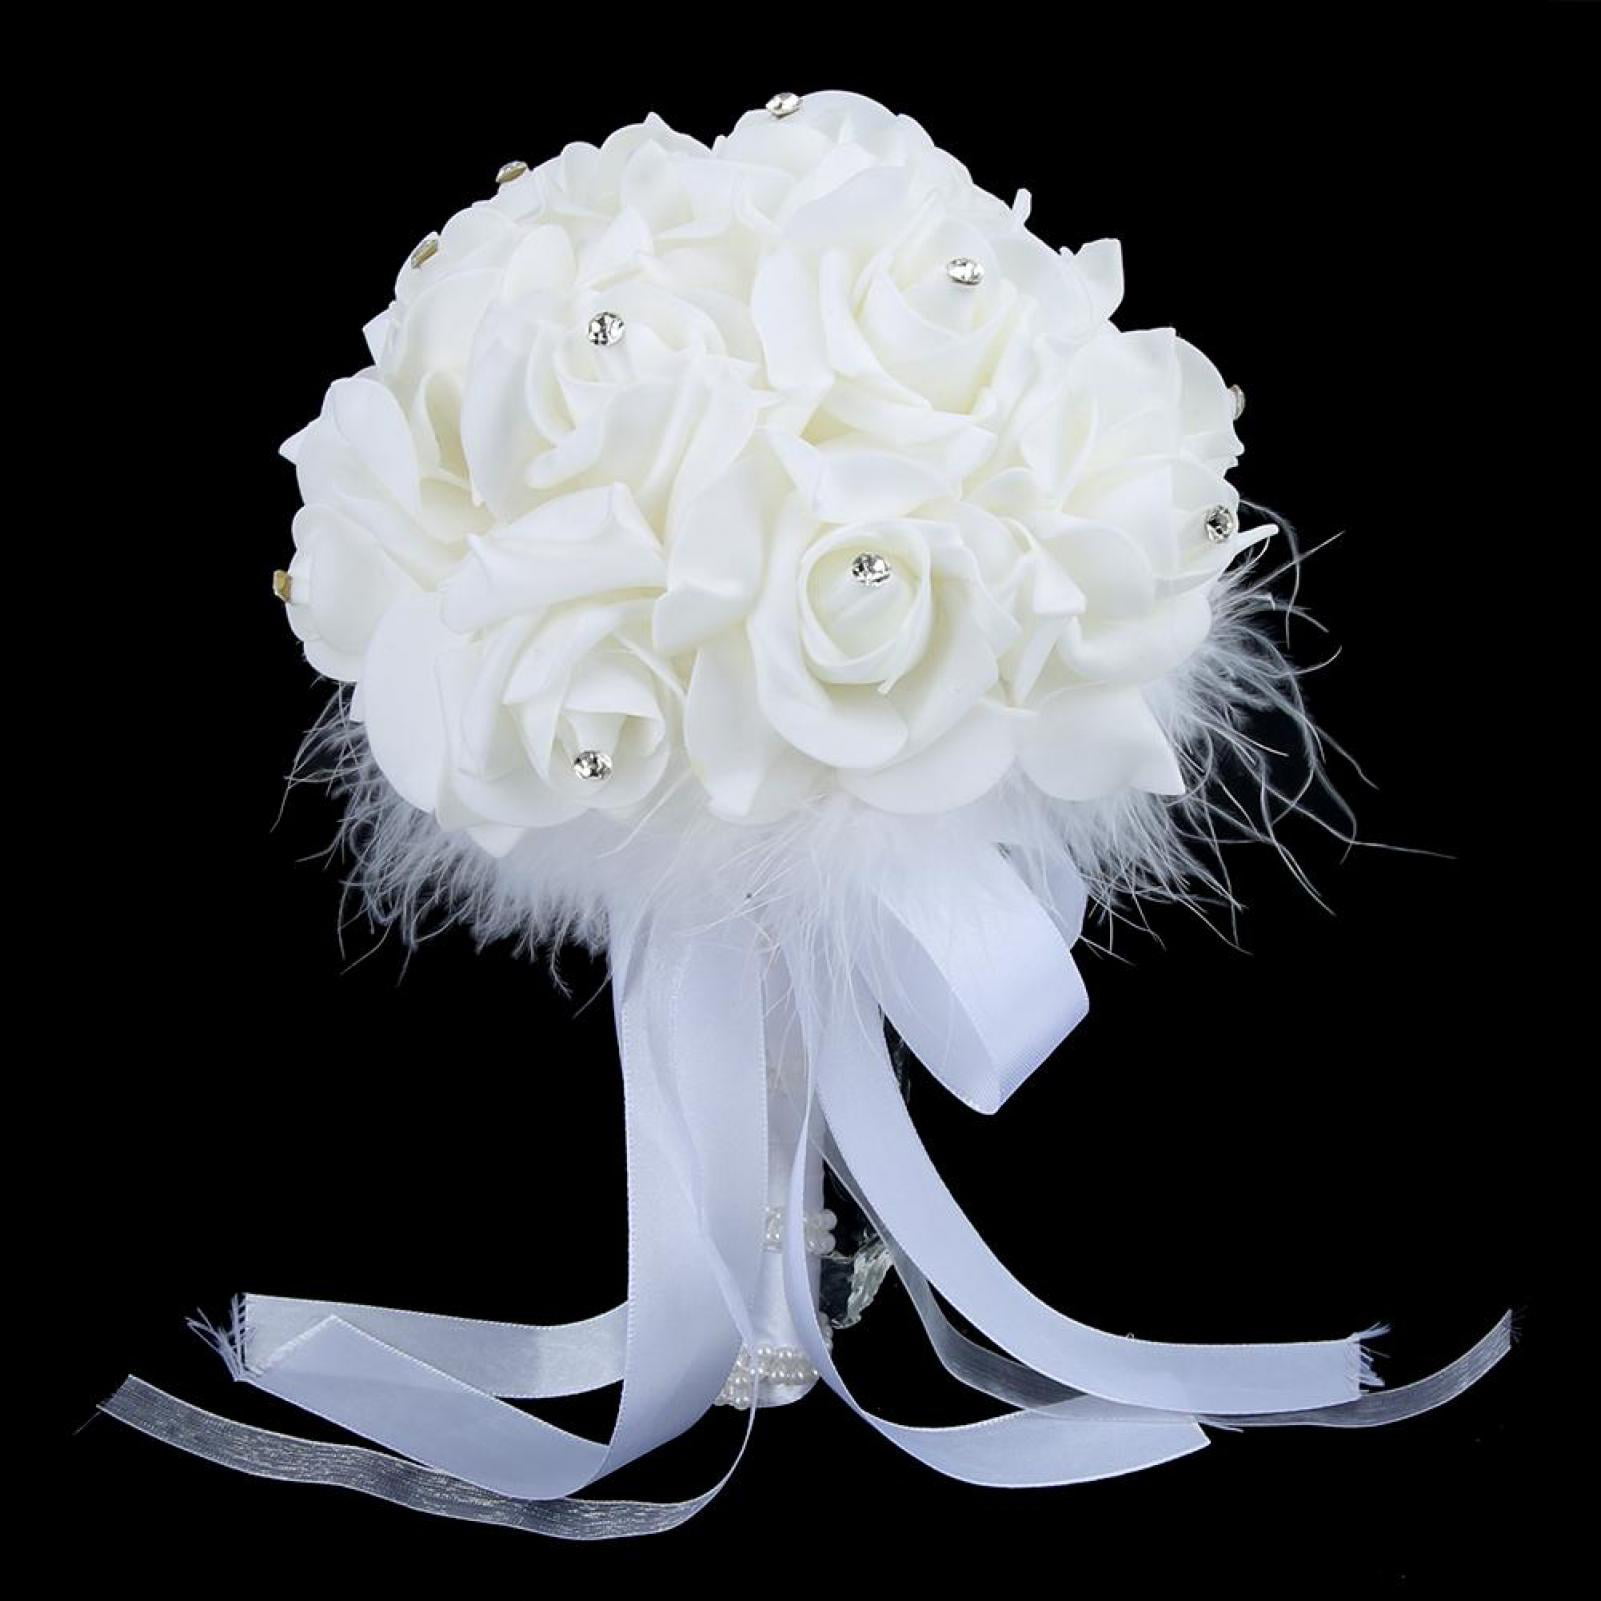 Newly Bride Bouquet Wedding Foam Simulation Holding Flowers Elegant Party Decor 